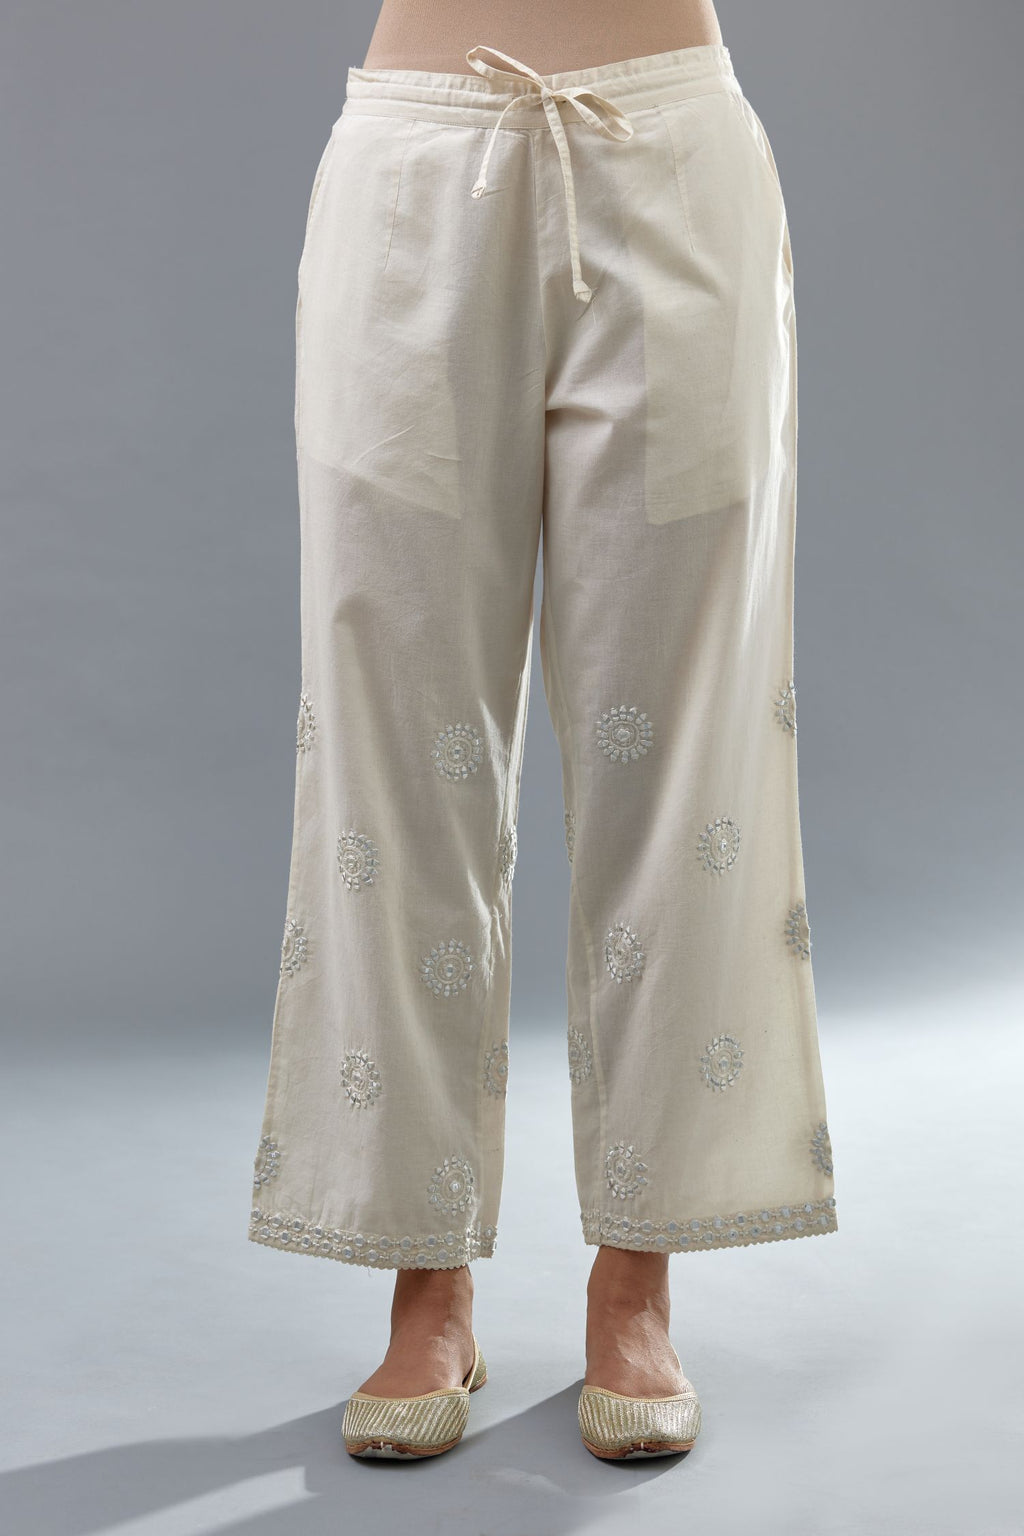 ALAÏA Women's Cotton Gabardine Straight Pants | ALAÏA VE